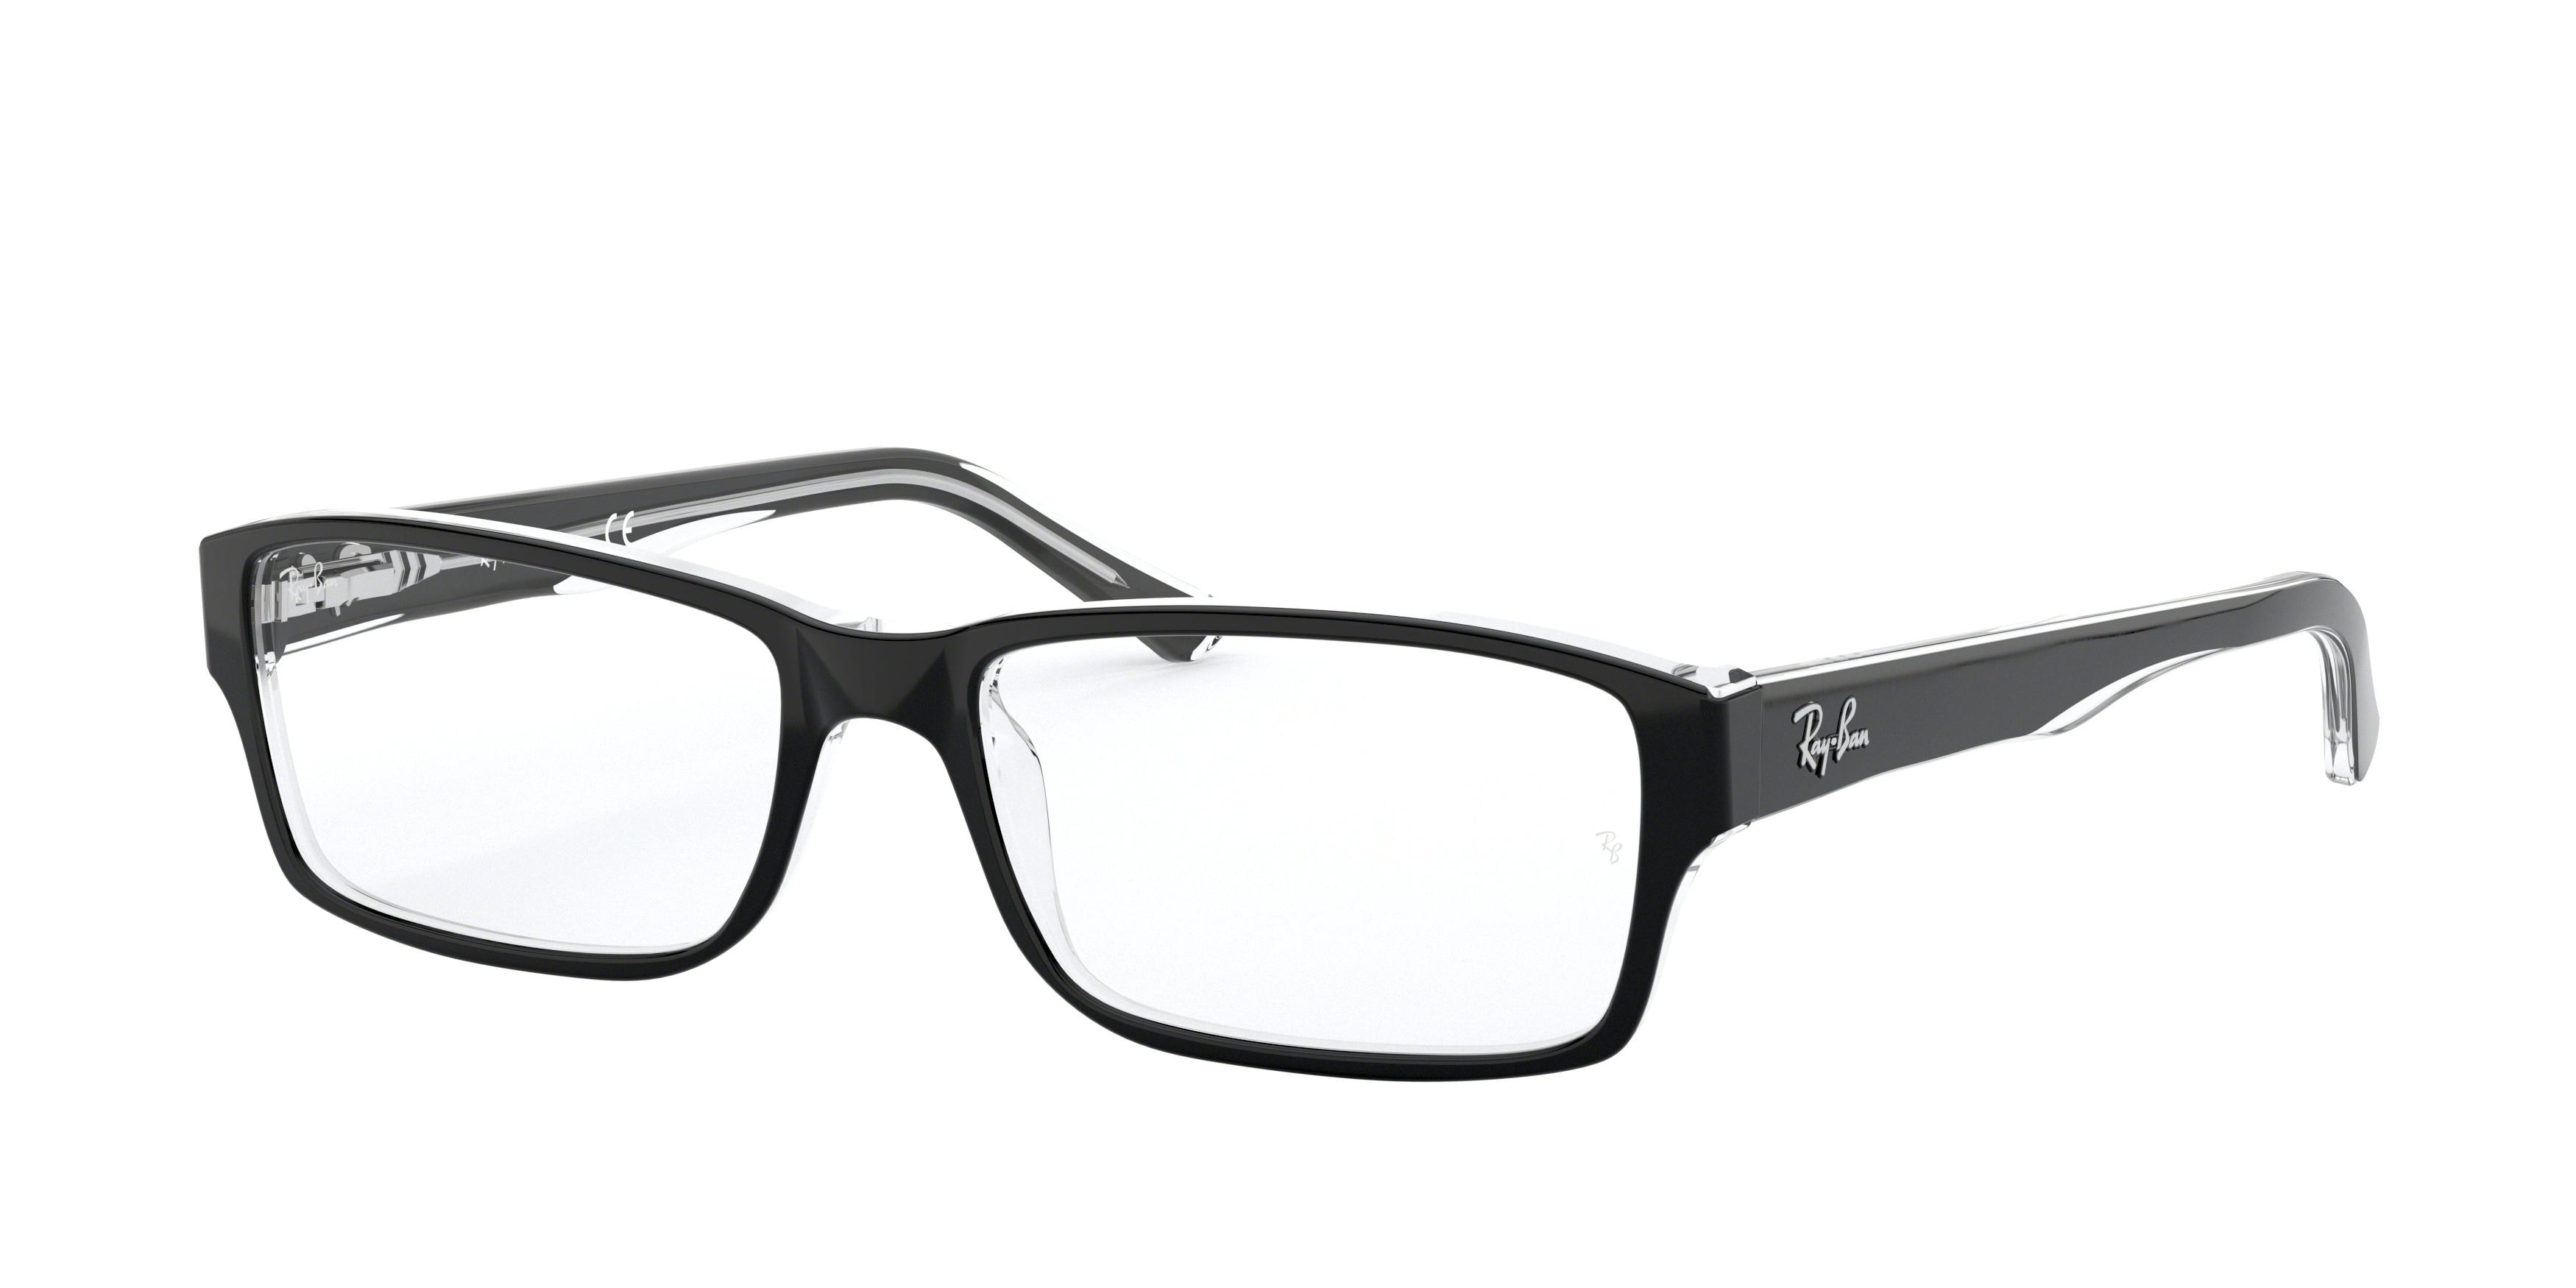 Buy Ray-ban RX5169 2034 Black Prescription Glasses